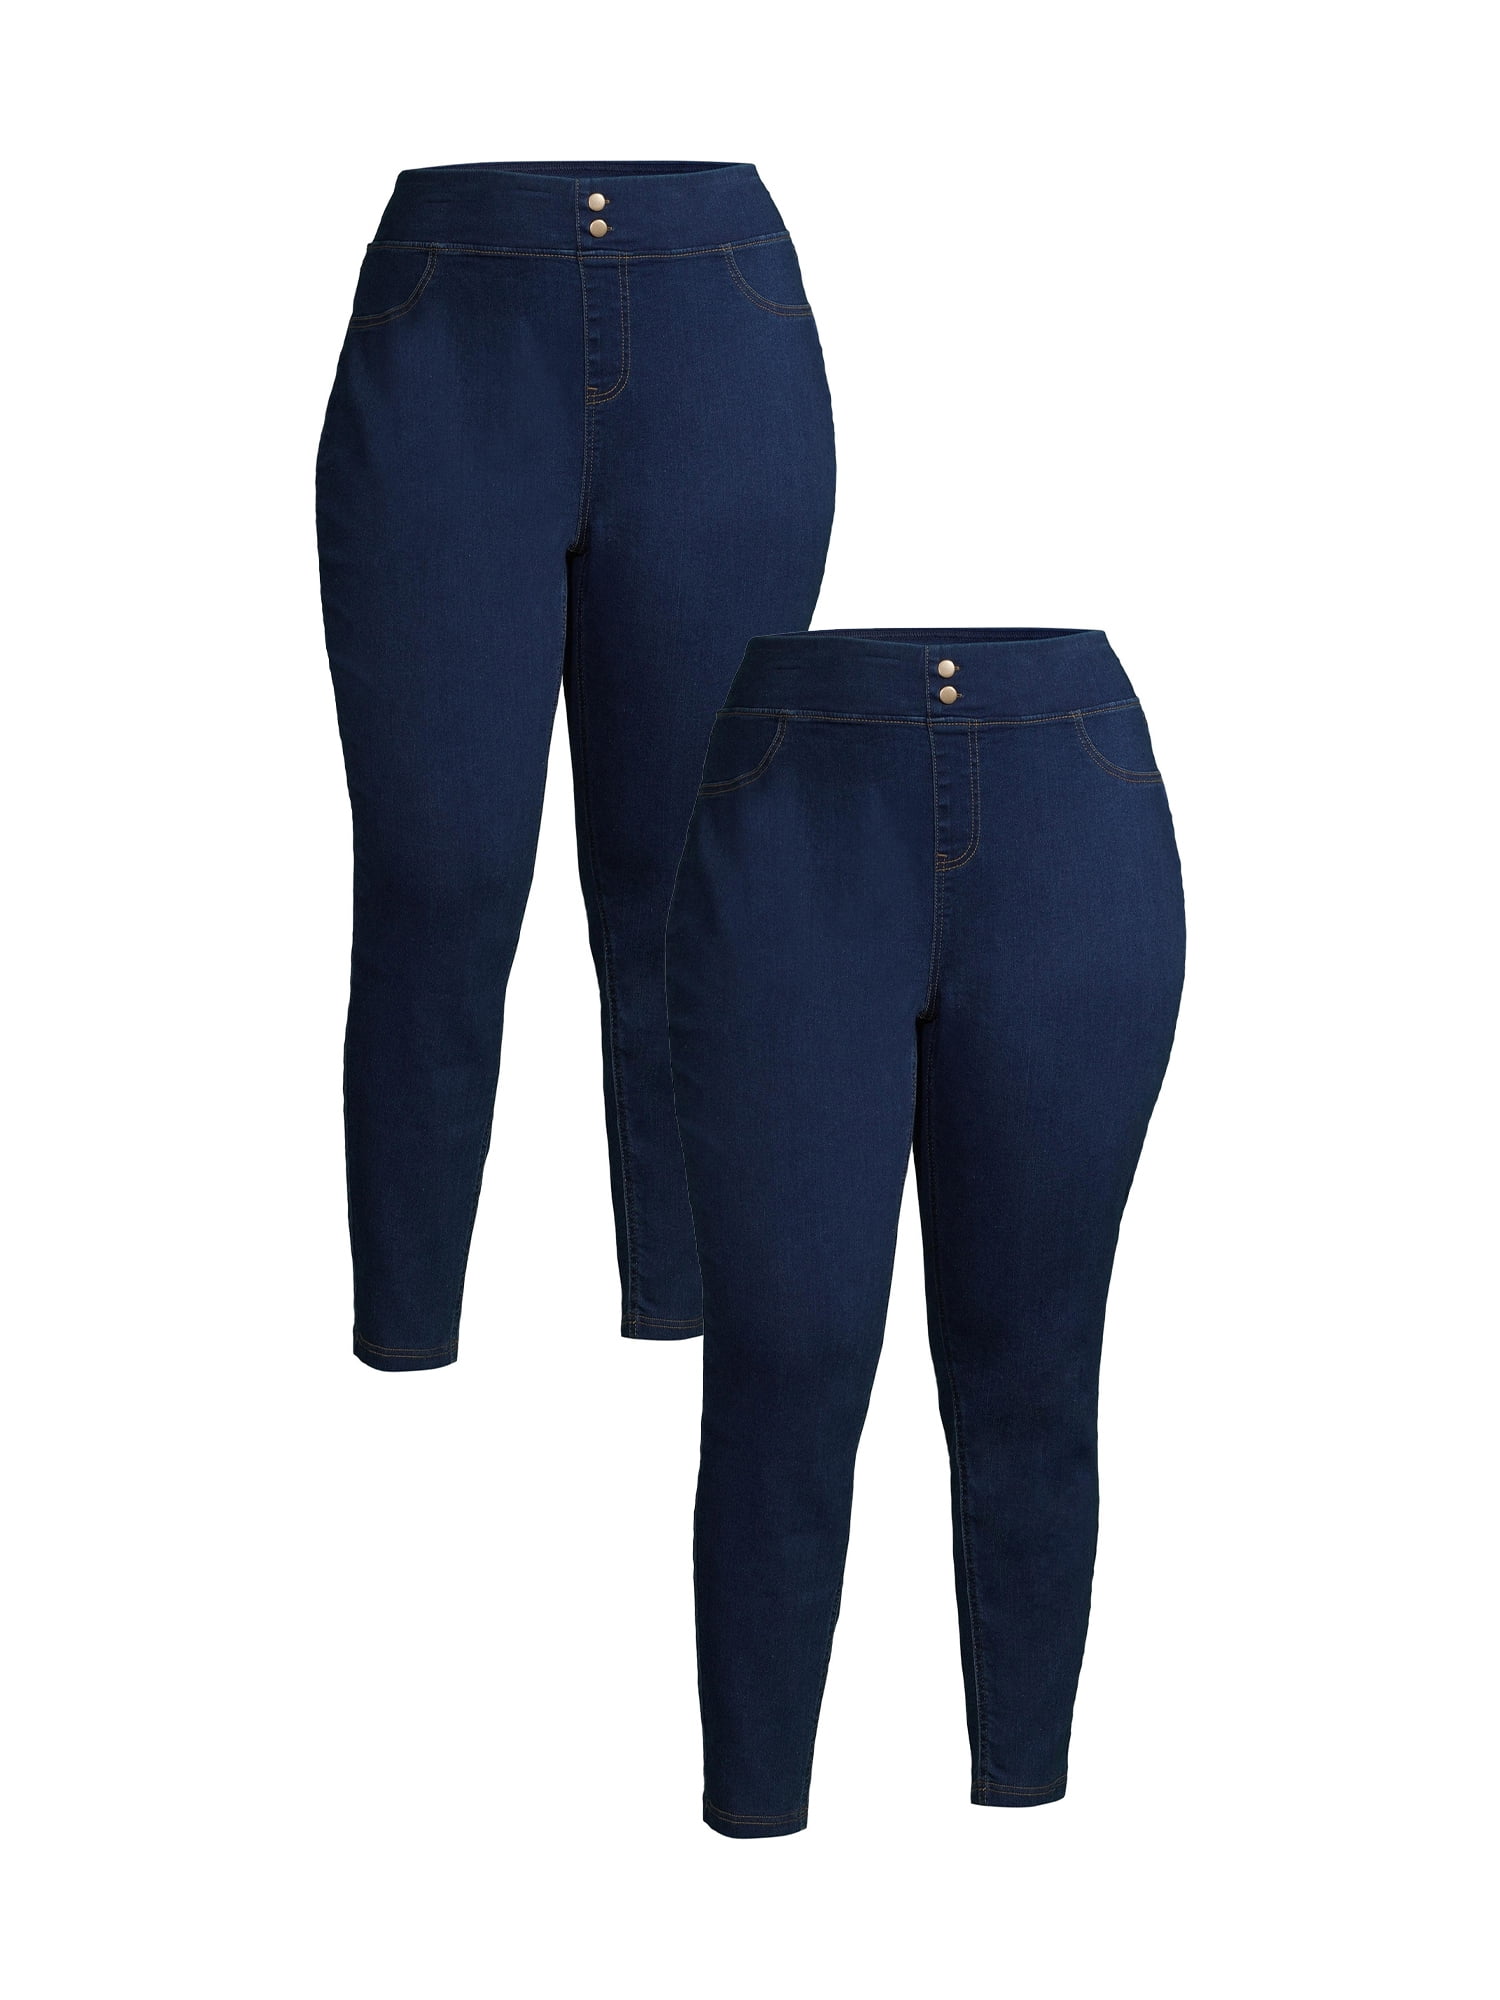 Terra & Sky Women's Plus Size Pull On Jegging Jean, 2-pack